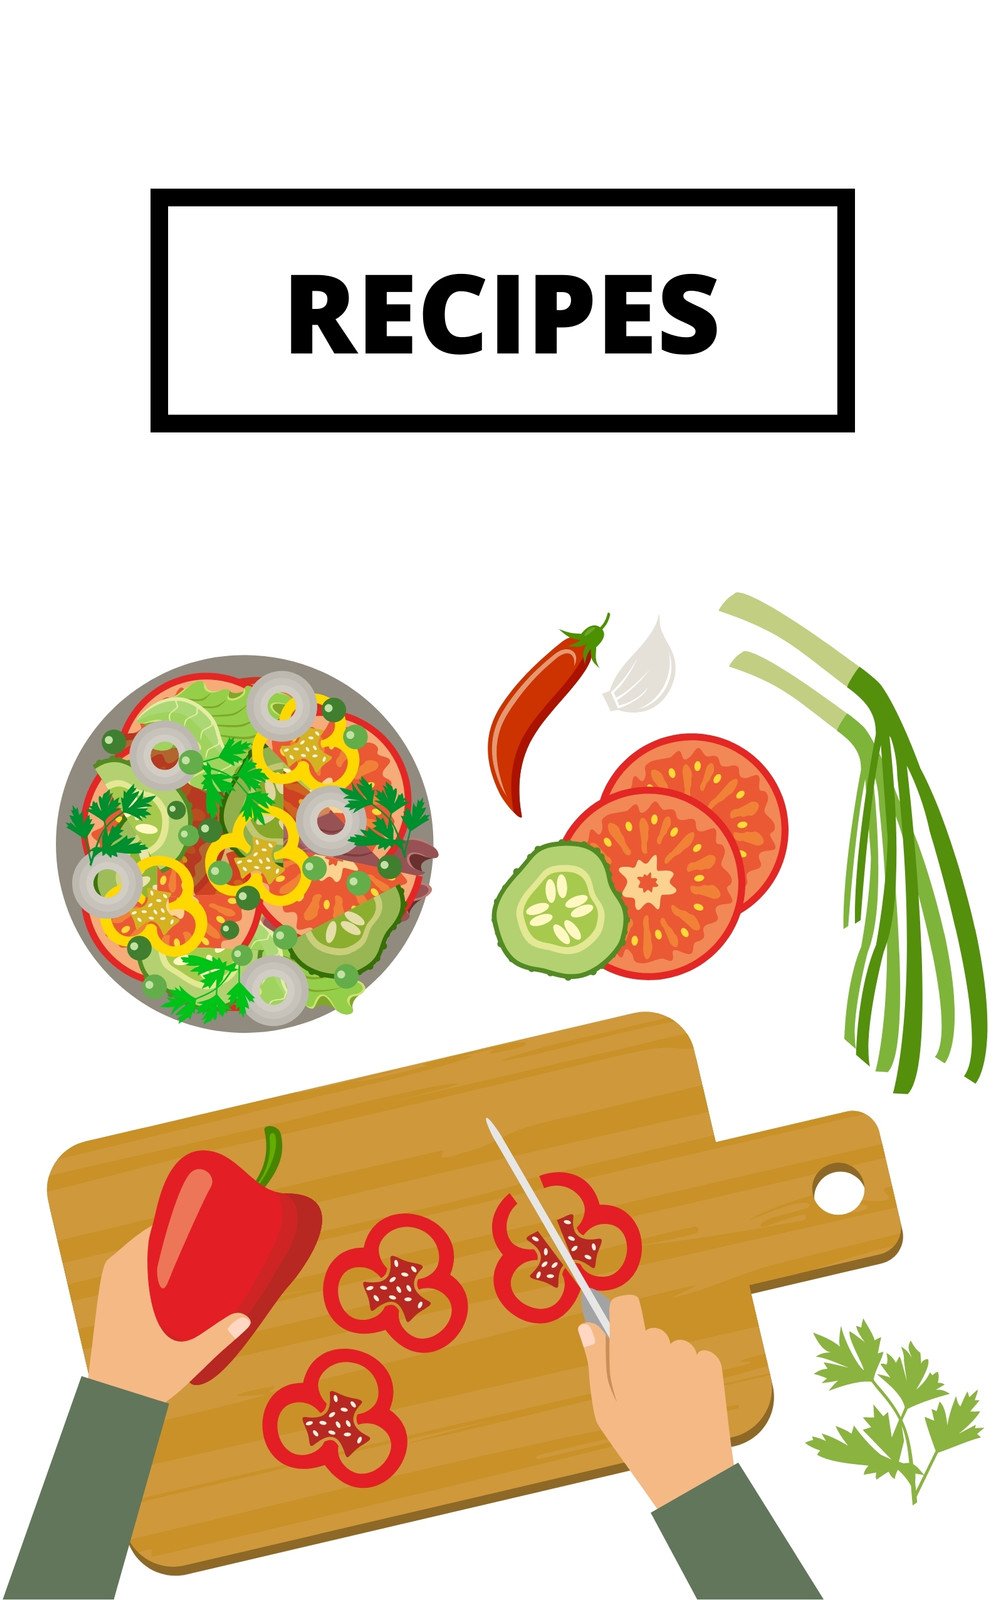 recipe book cover clipart